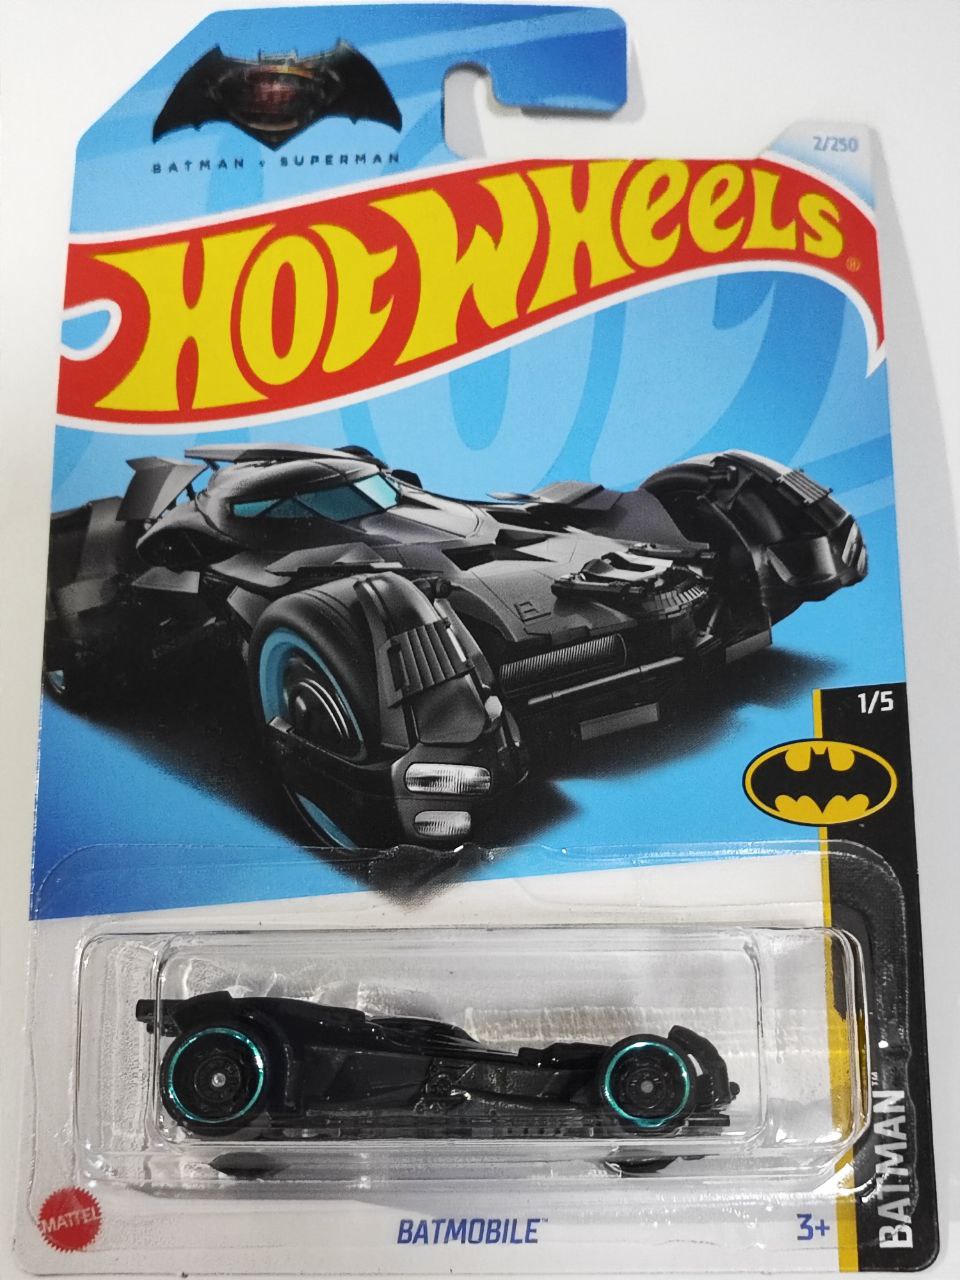 2024 Hot Wheels Batmobile Batman 1/5, 2/250